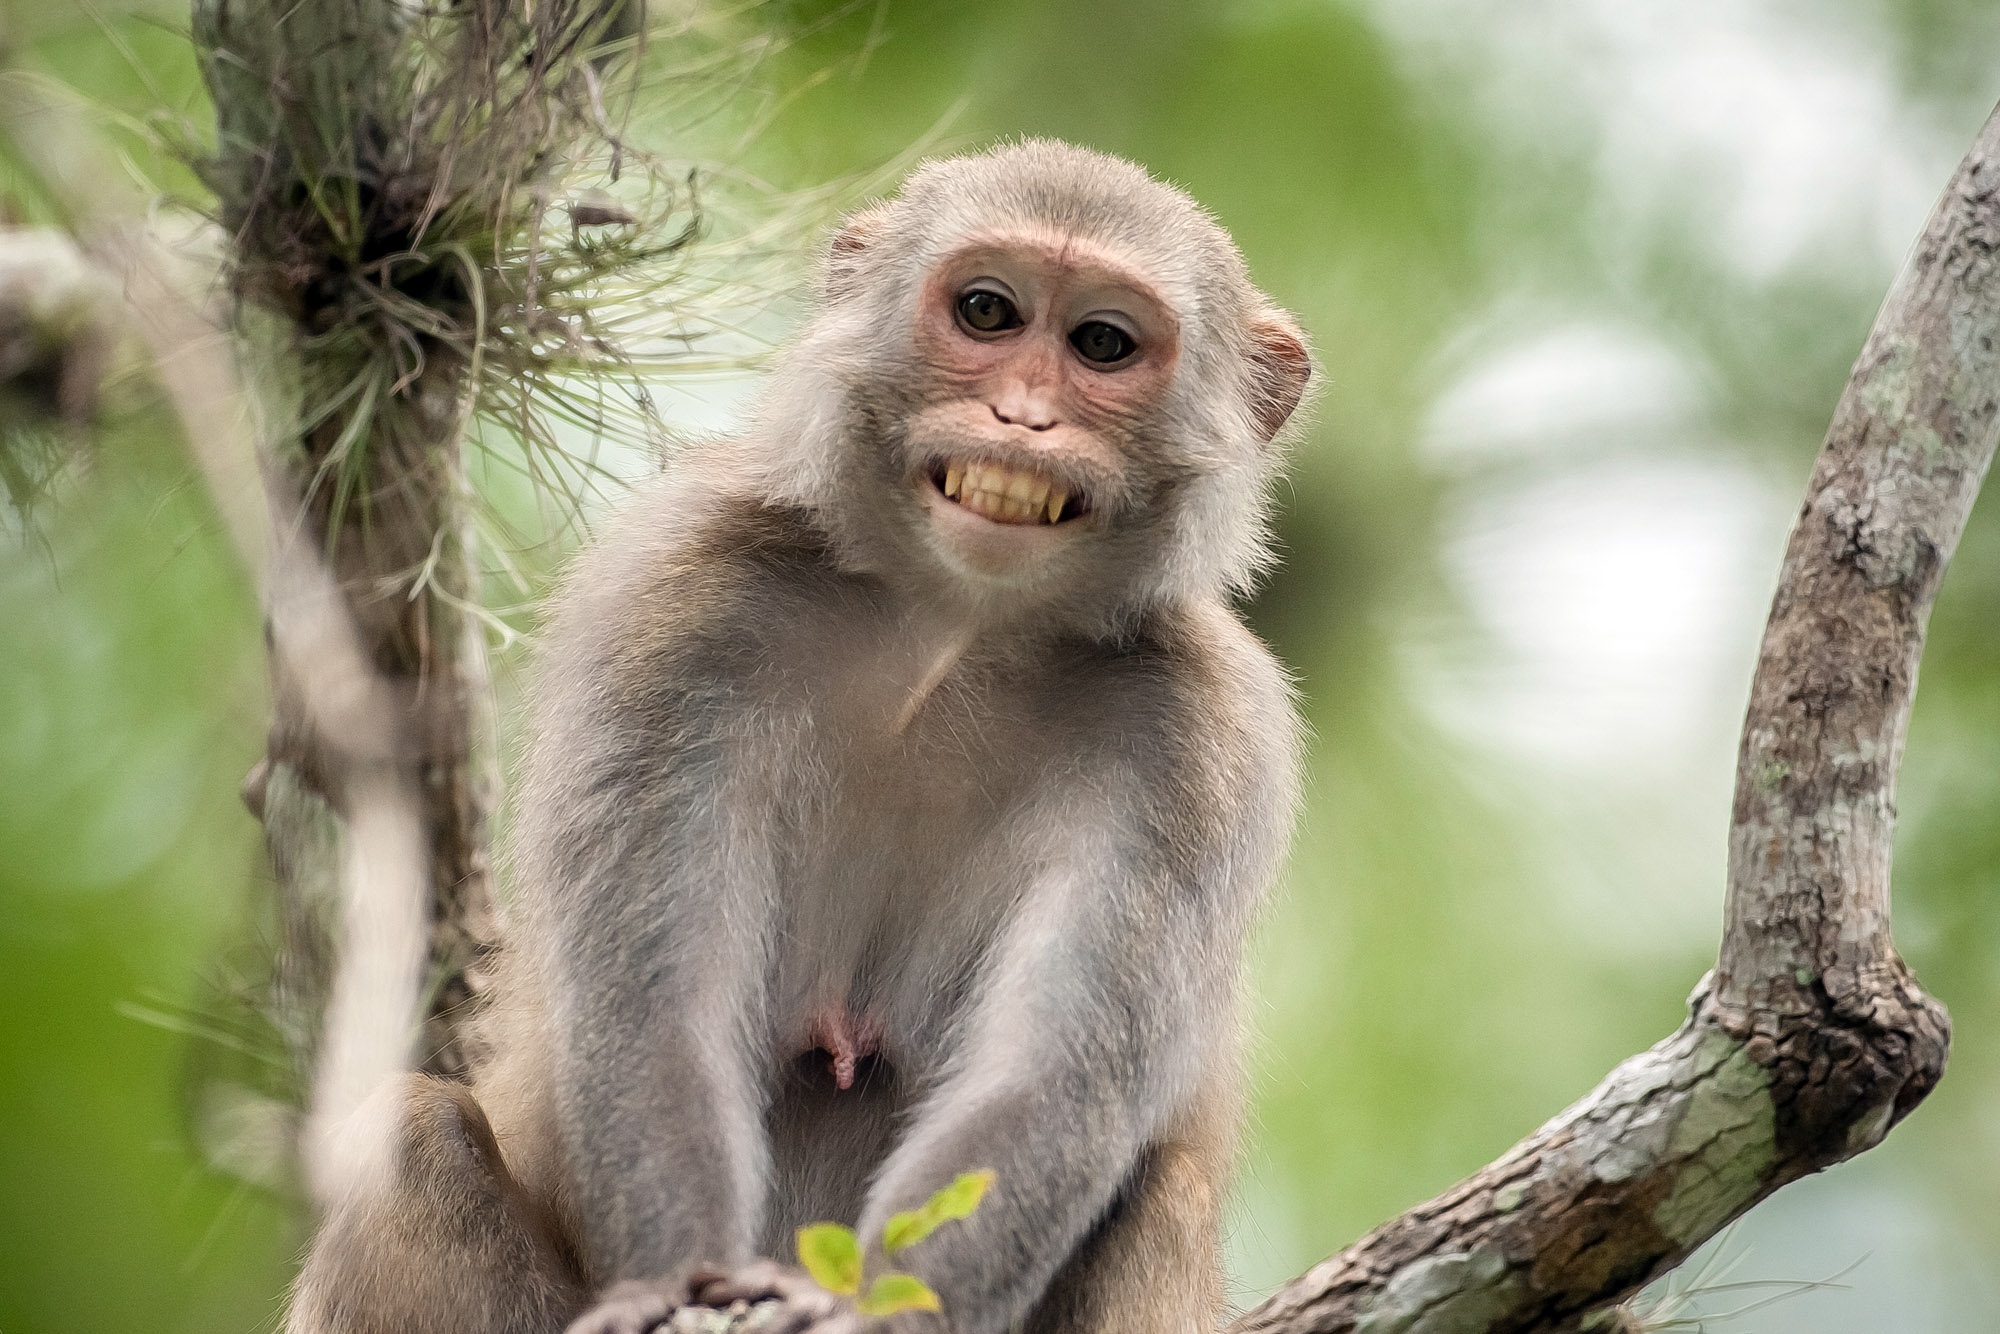 images of monkeys smile